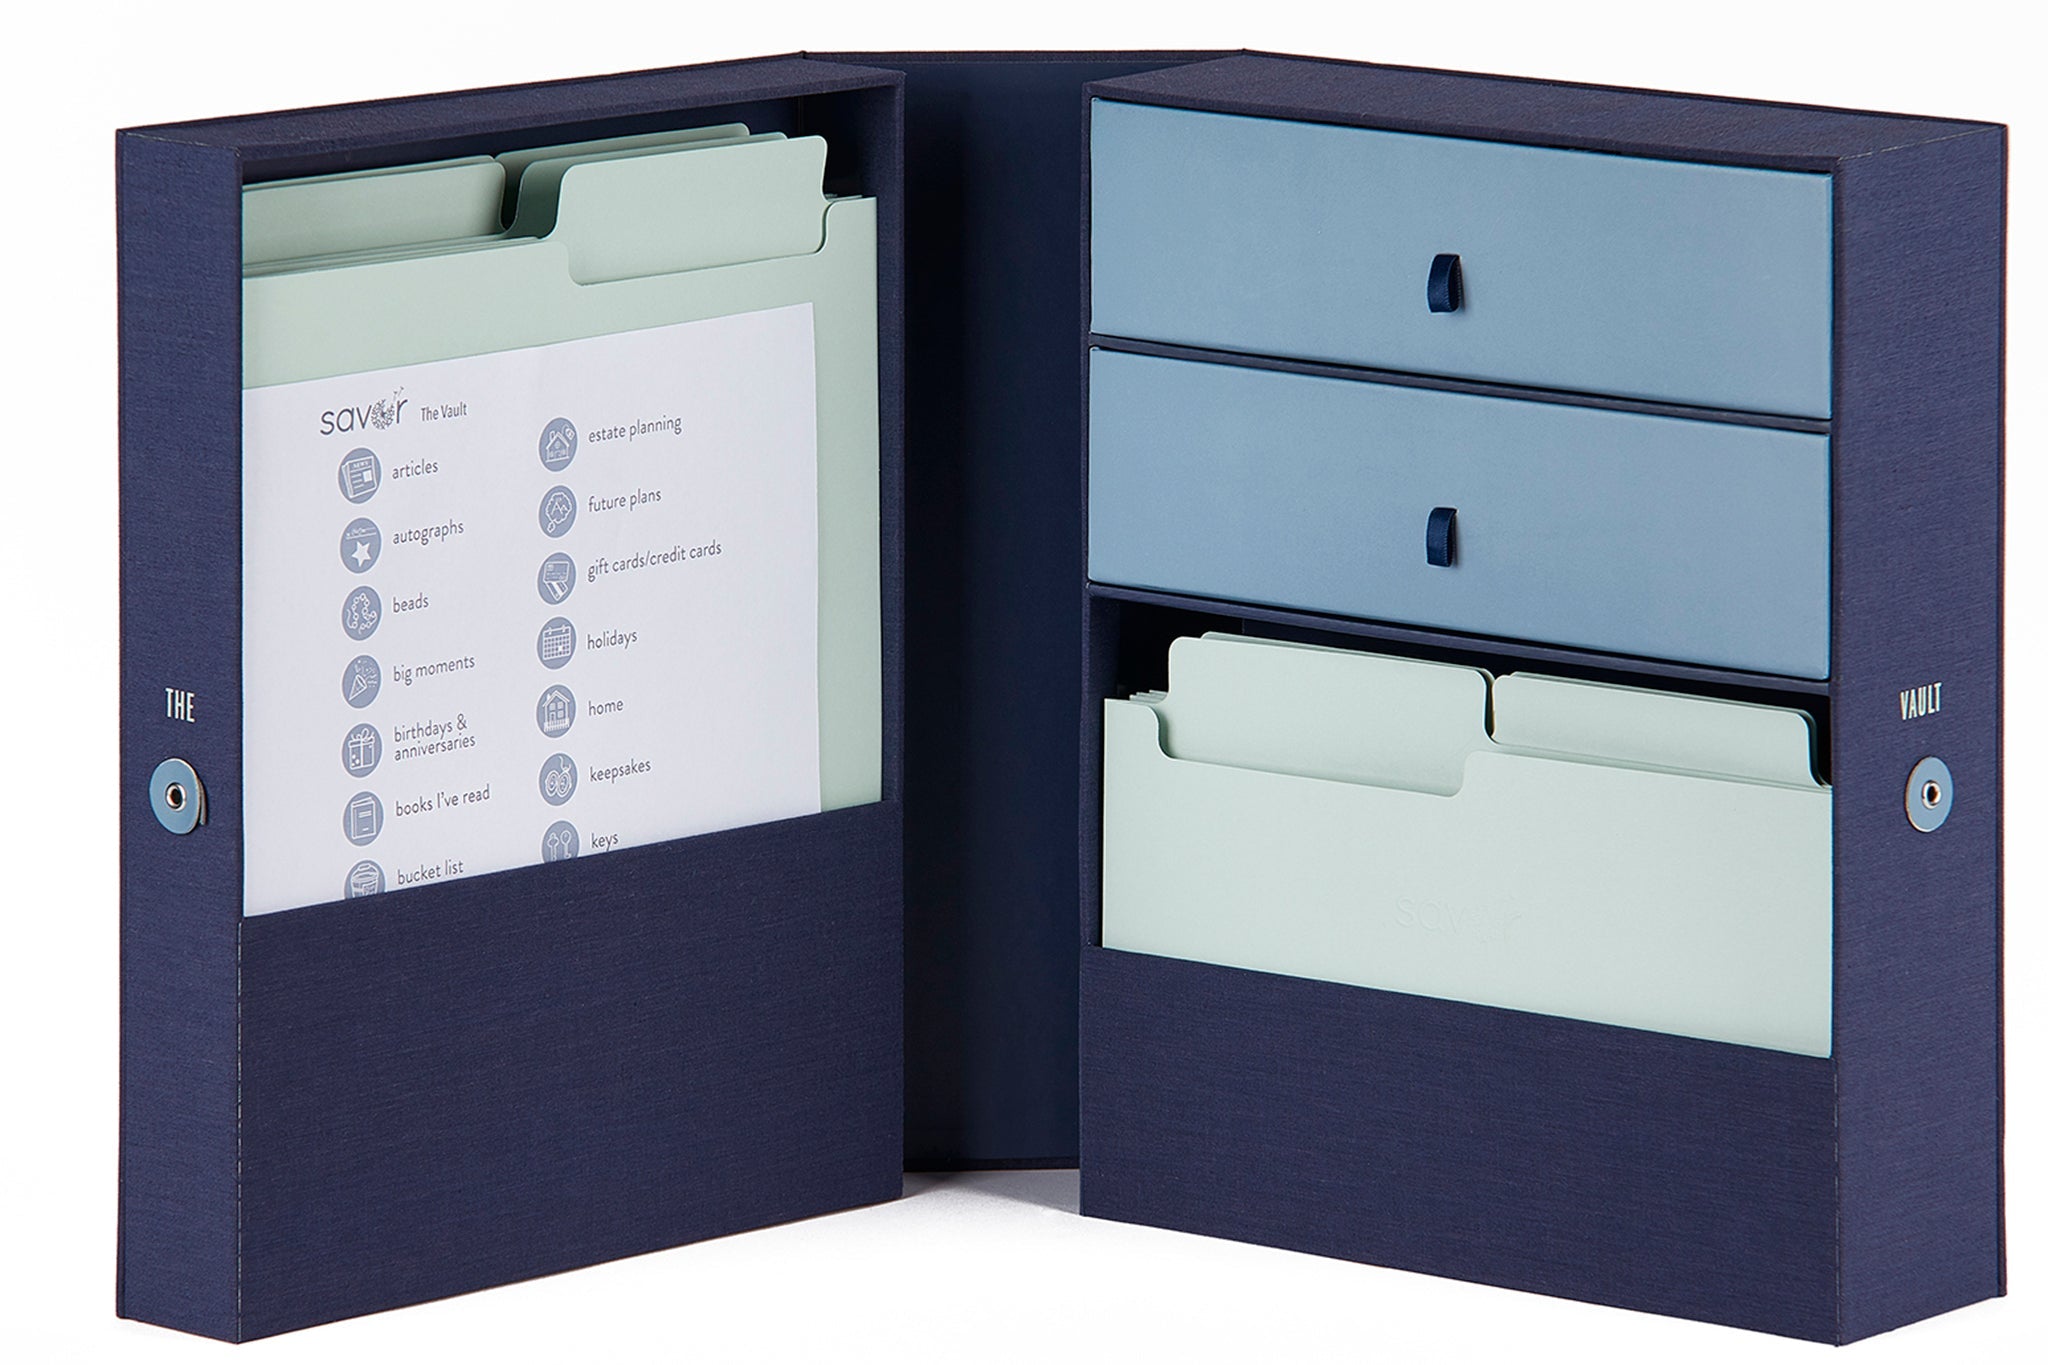 open blue vault keepsake box with label sheet showing